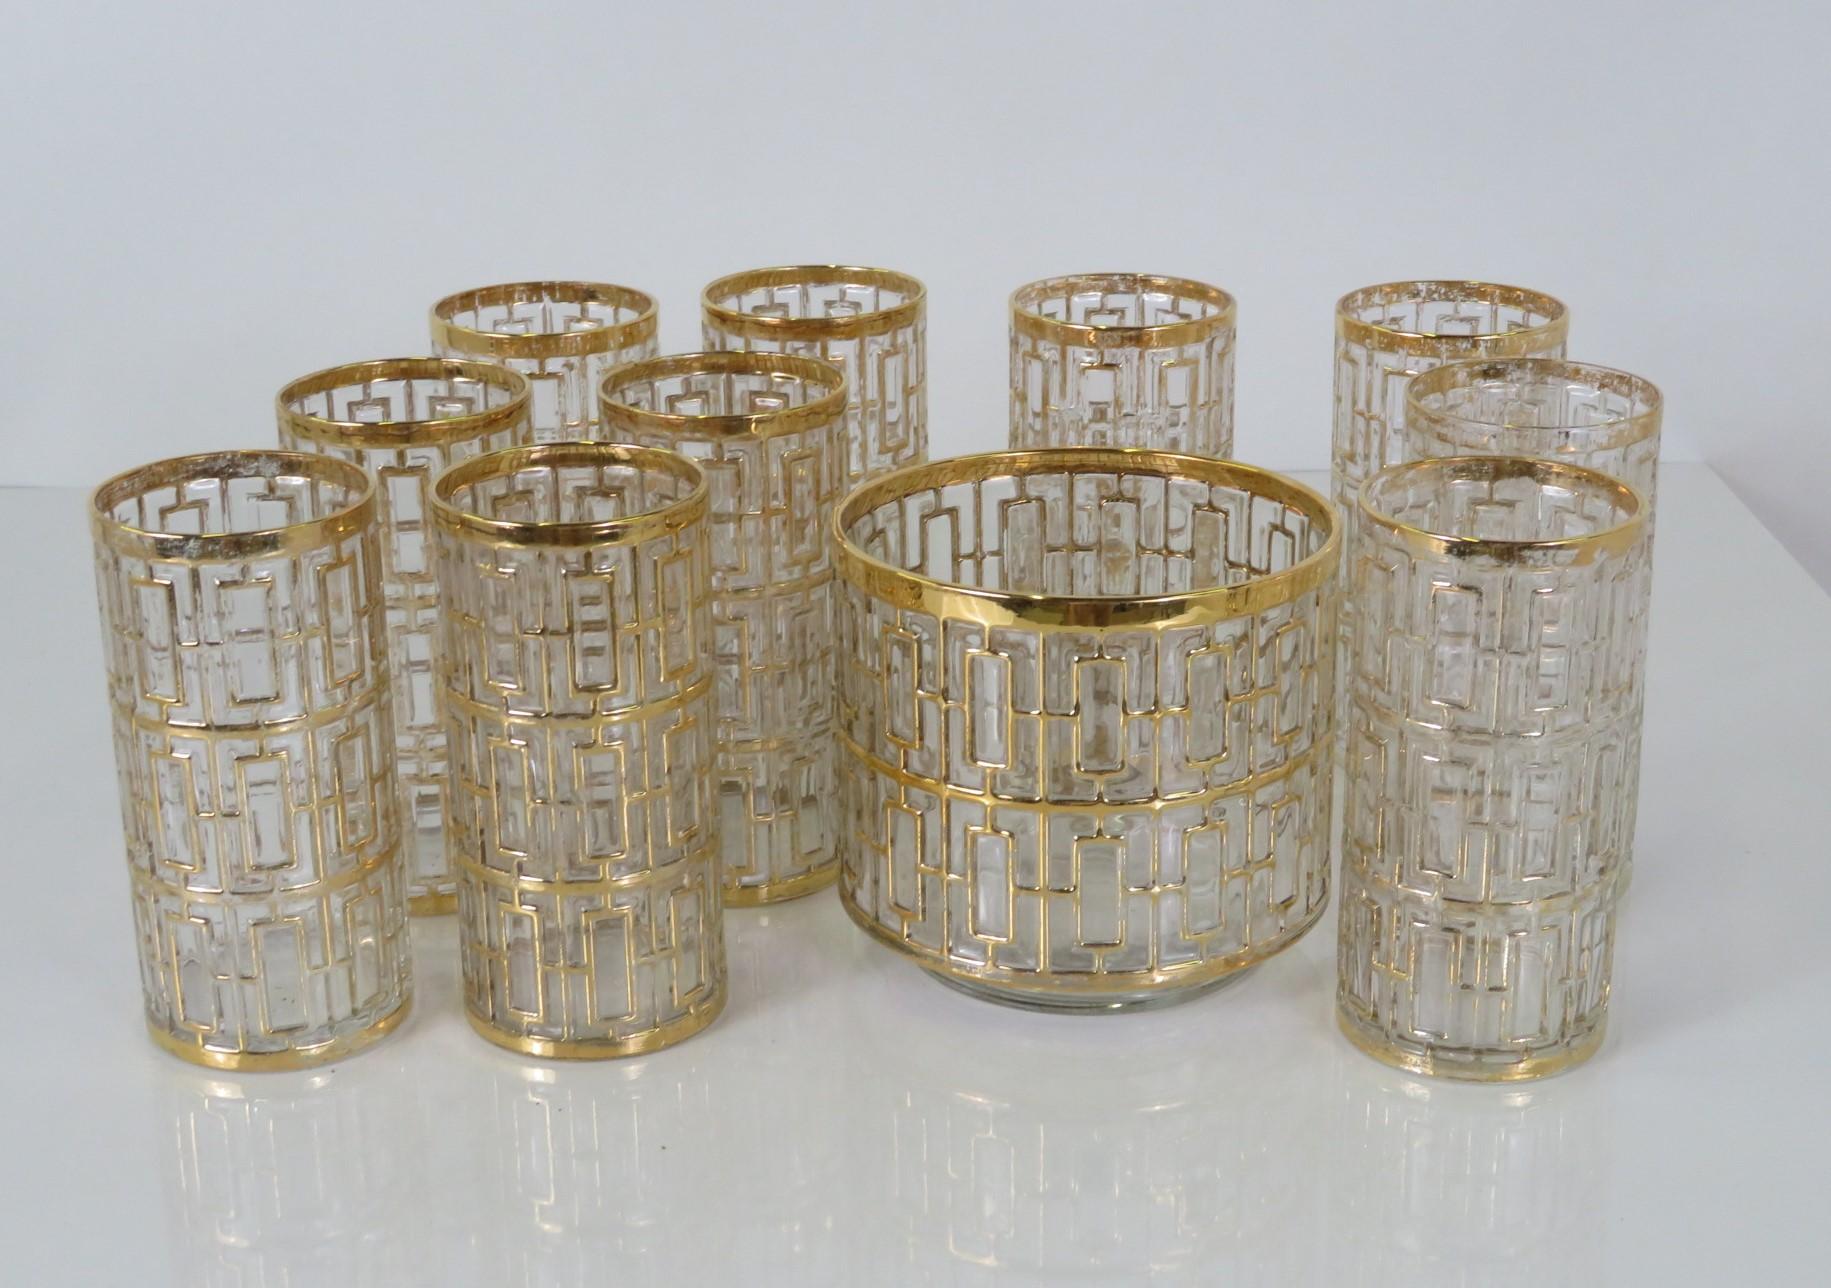 Hollywood Regency Mid-Century Modern Imperial Glass Company Shoji Screen Gilt Glasses and Ice Buck